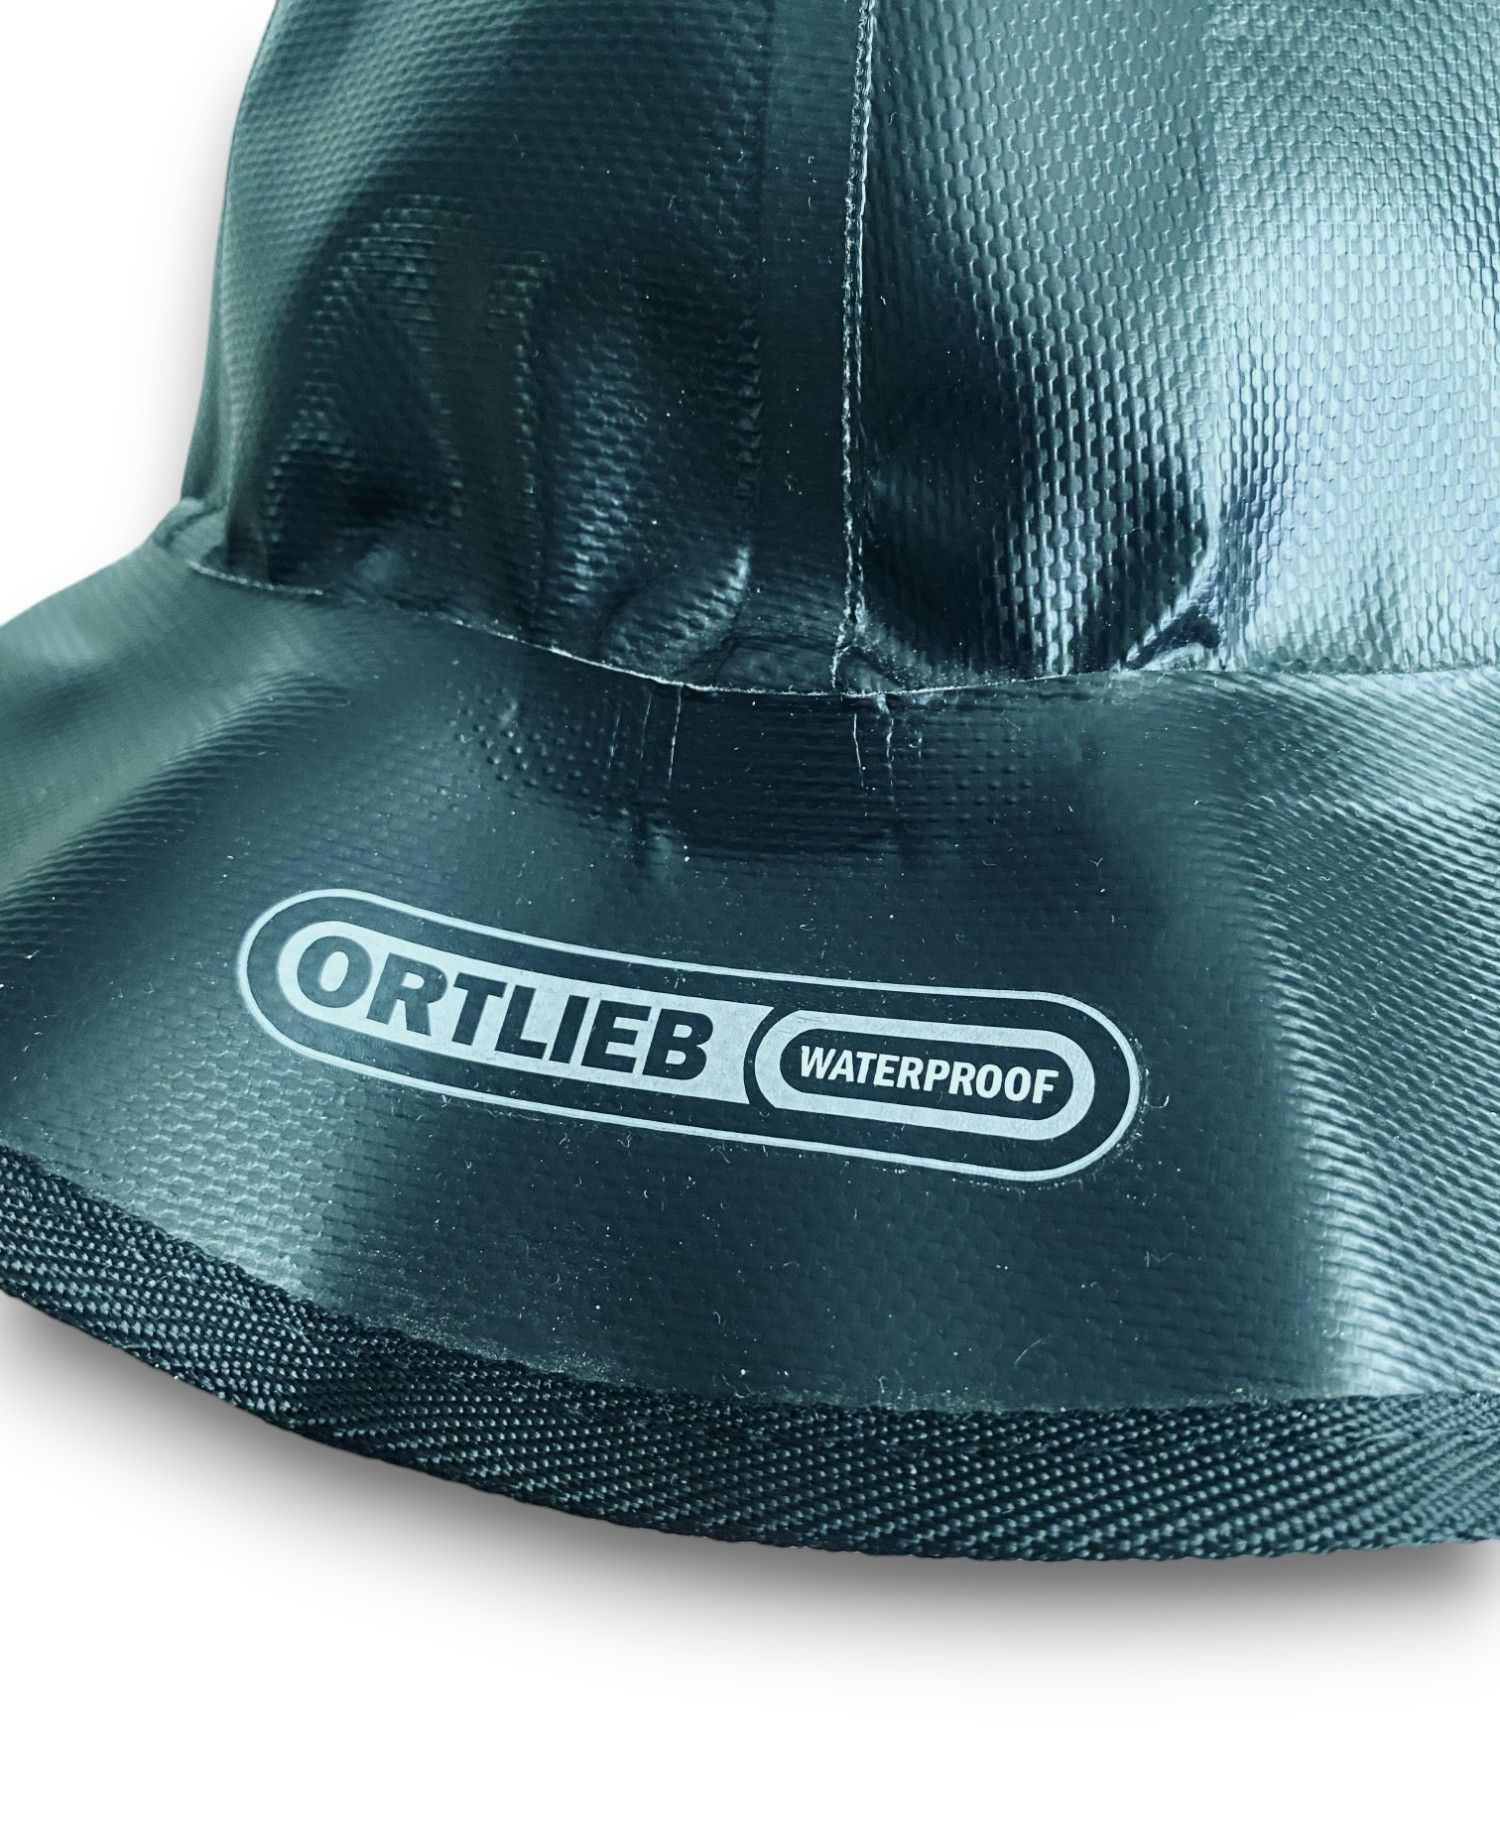 Outdoor Life - Ortlieb Boonie Hat Waterproof Rare Black Gorcope Goretex - 3